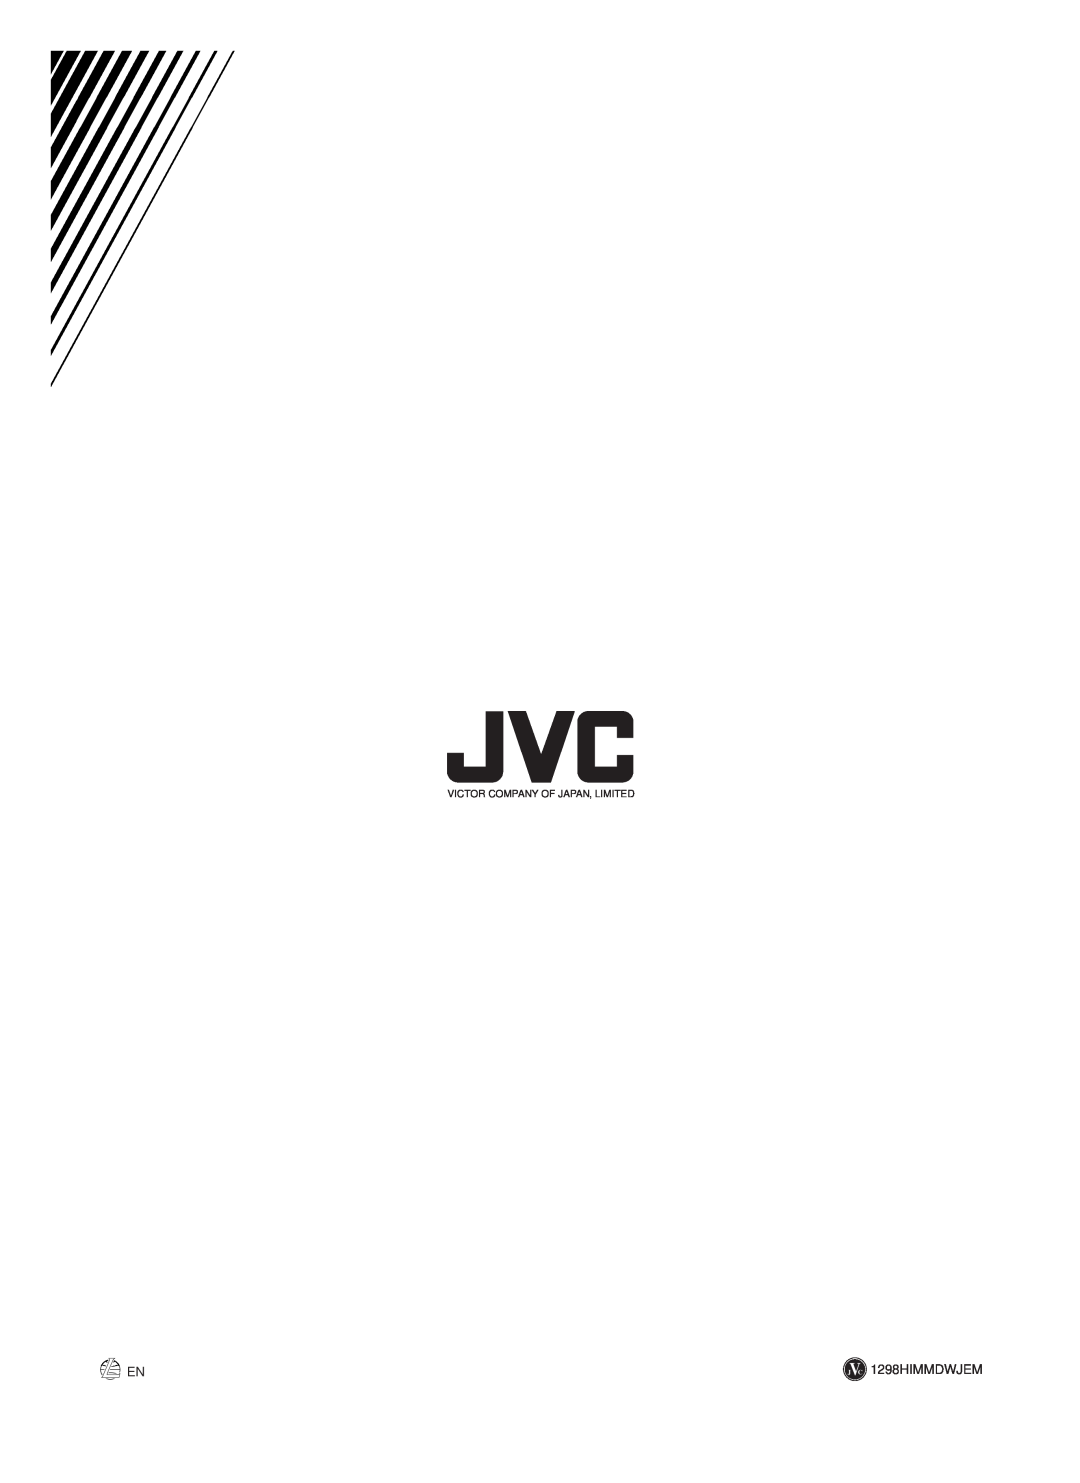 JVC RX-558VBK manual 1298HIMMDWJEM, Victor Company Of Japan, Limited 